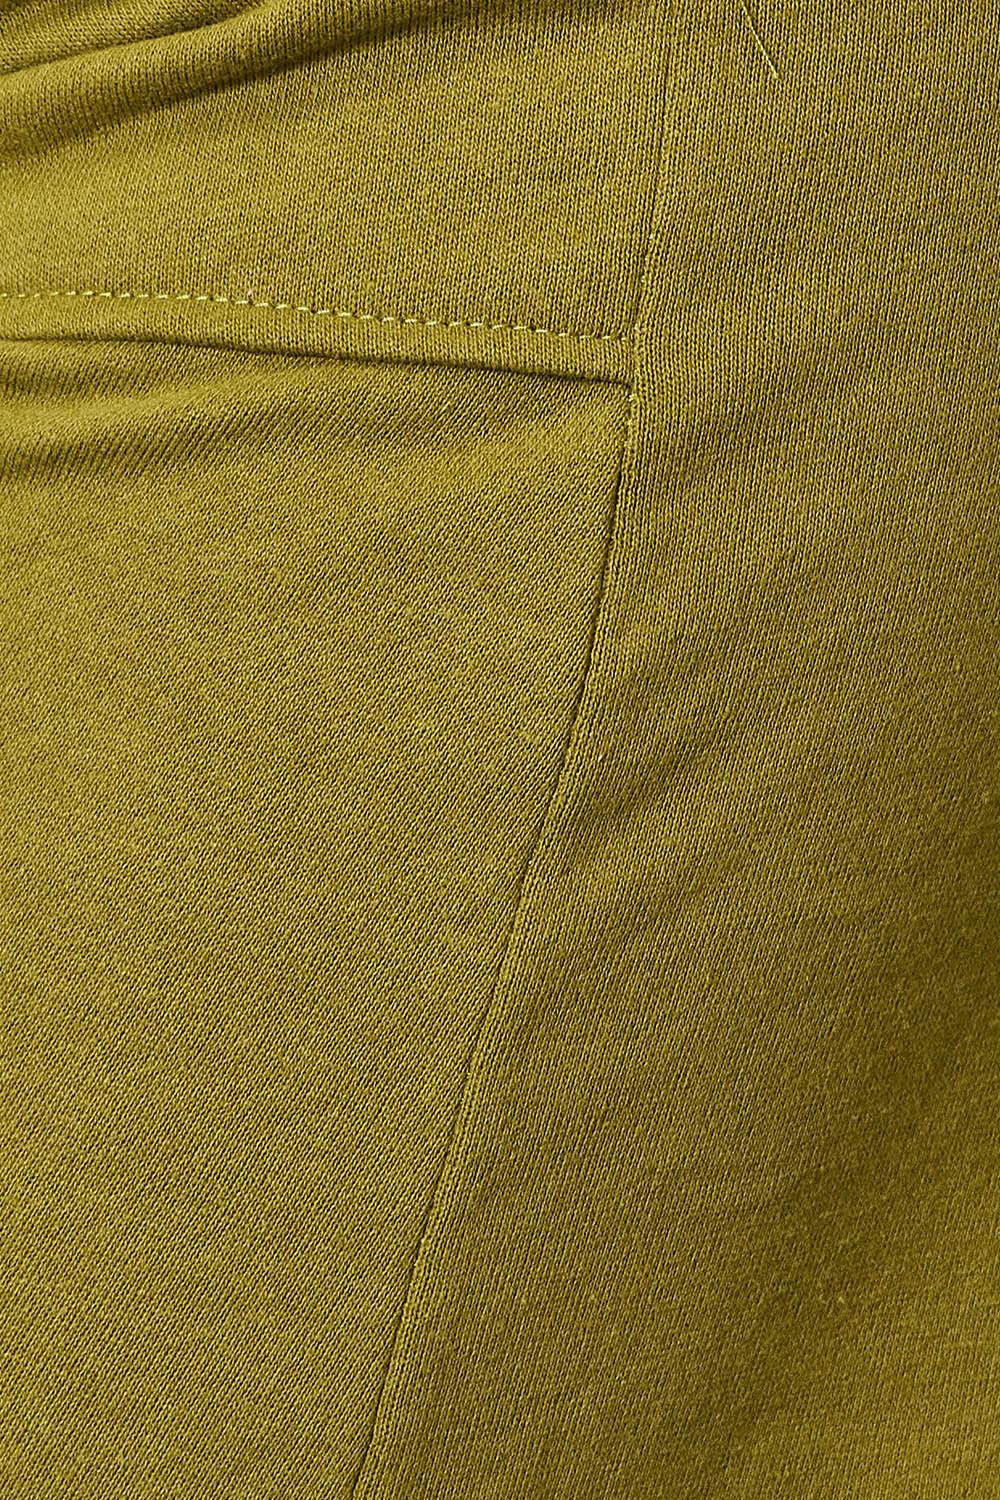 Bona Fide Fashion - Full Size Drawstring Sweatpants with pockets - Women Fashion - Bona Fide Fashion